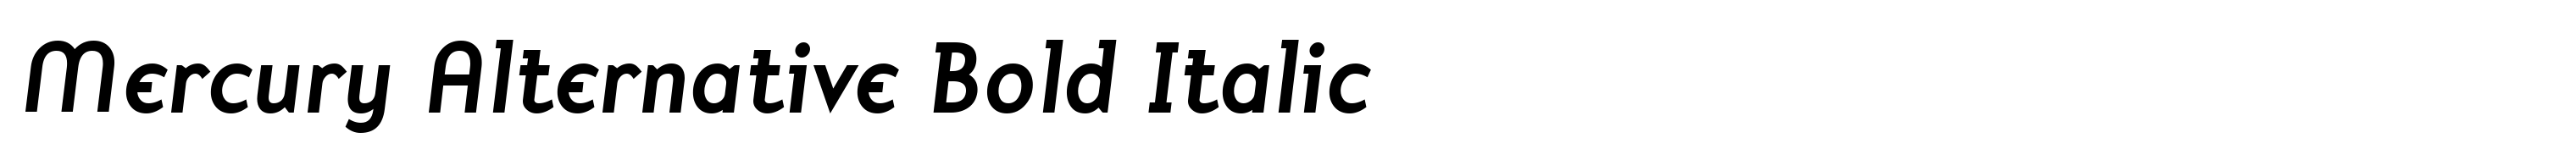 Mercury Alternative Bold Italic